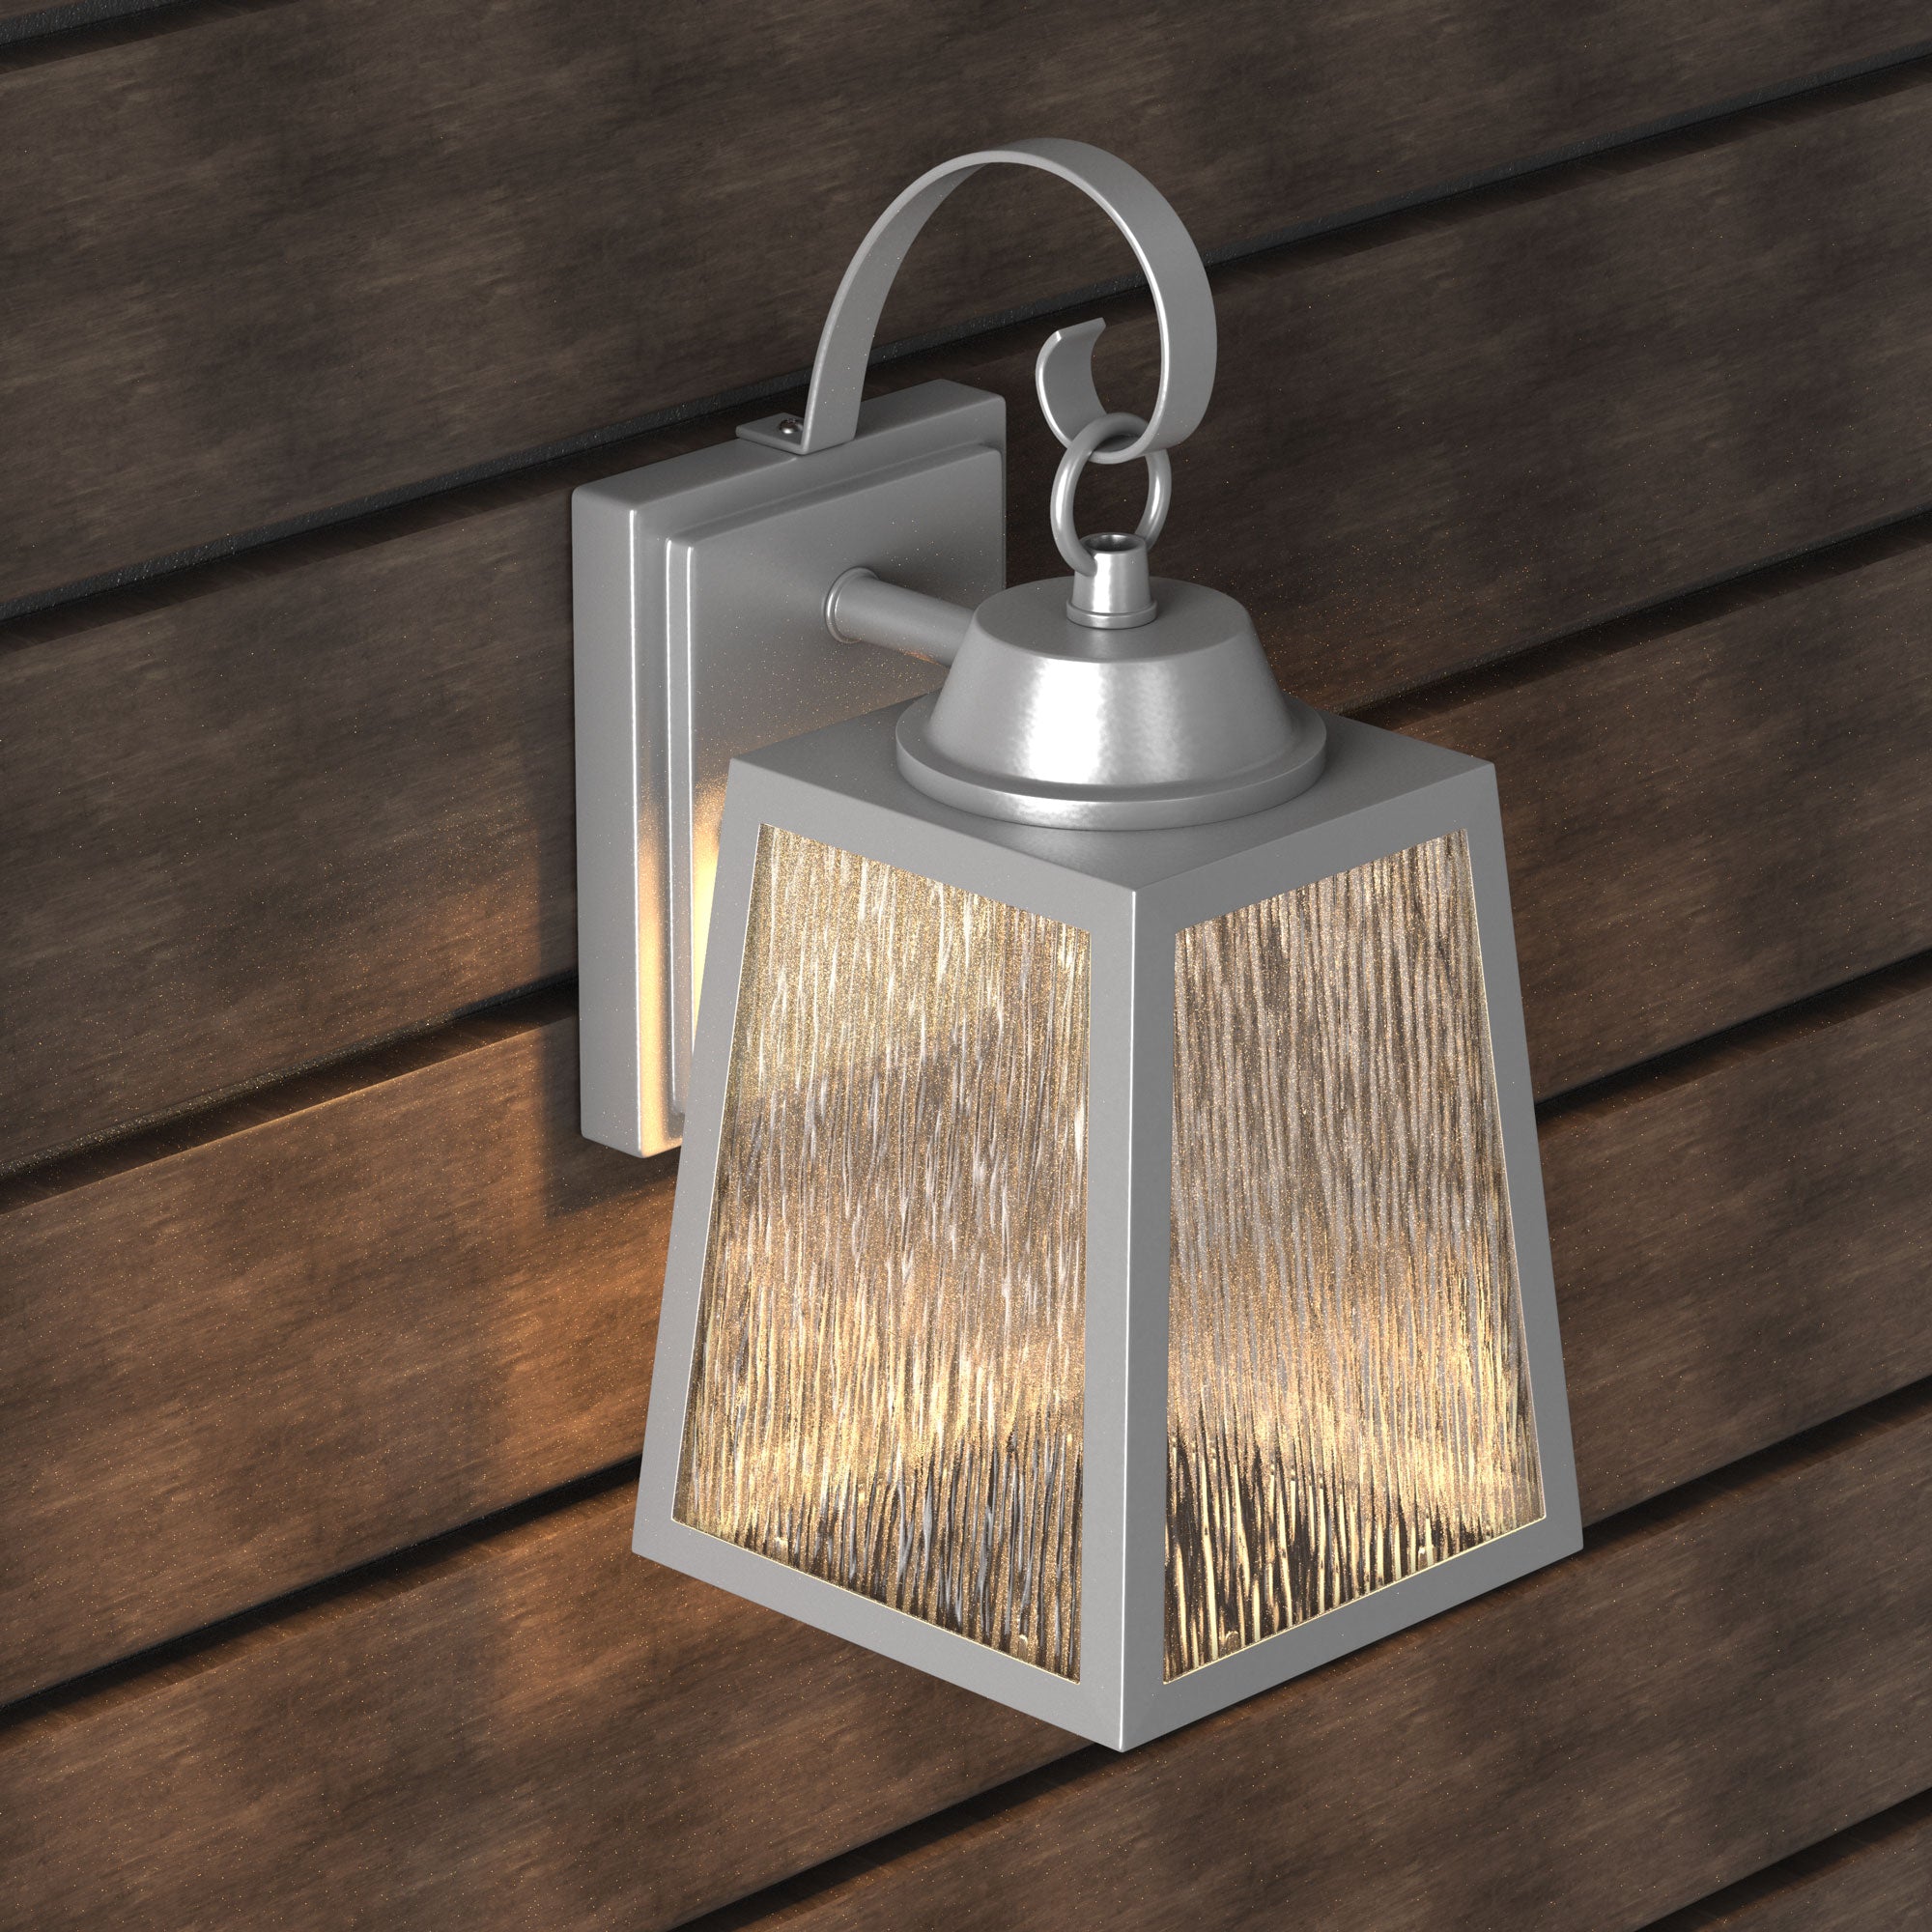 textured-black-outdoor-wall-lantern